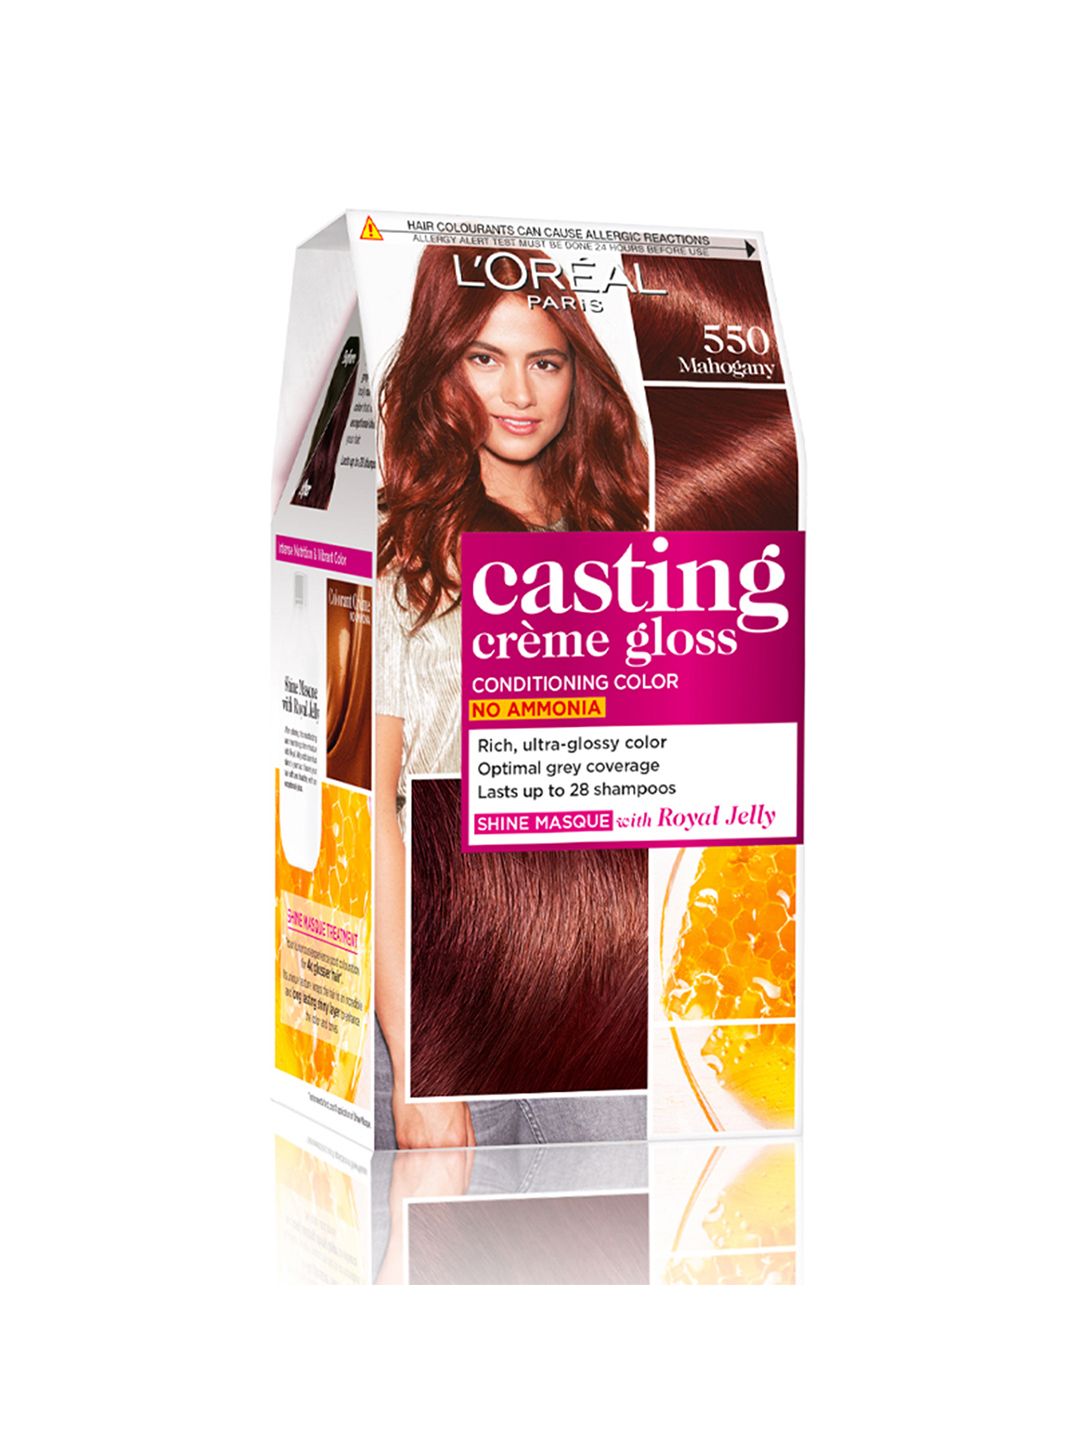 LOreal Paris Casting Creme Gloss Hair Color - Mahogany 550 87.5g+72ml Price in India